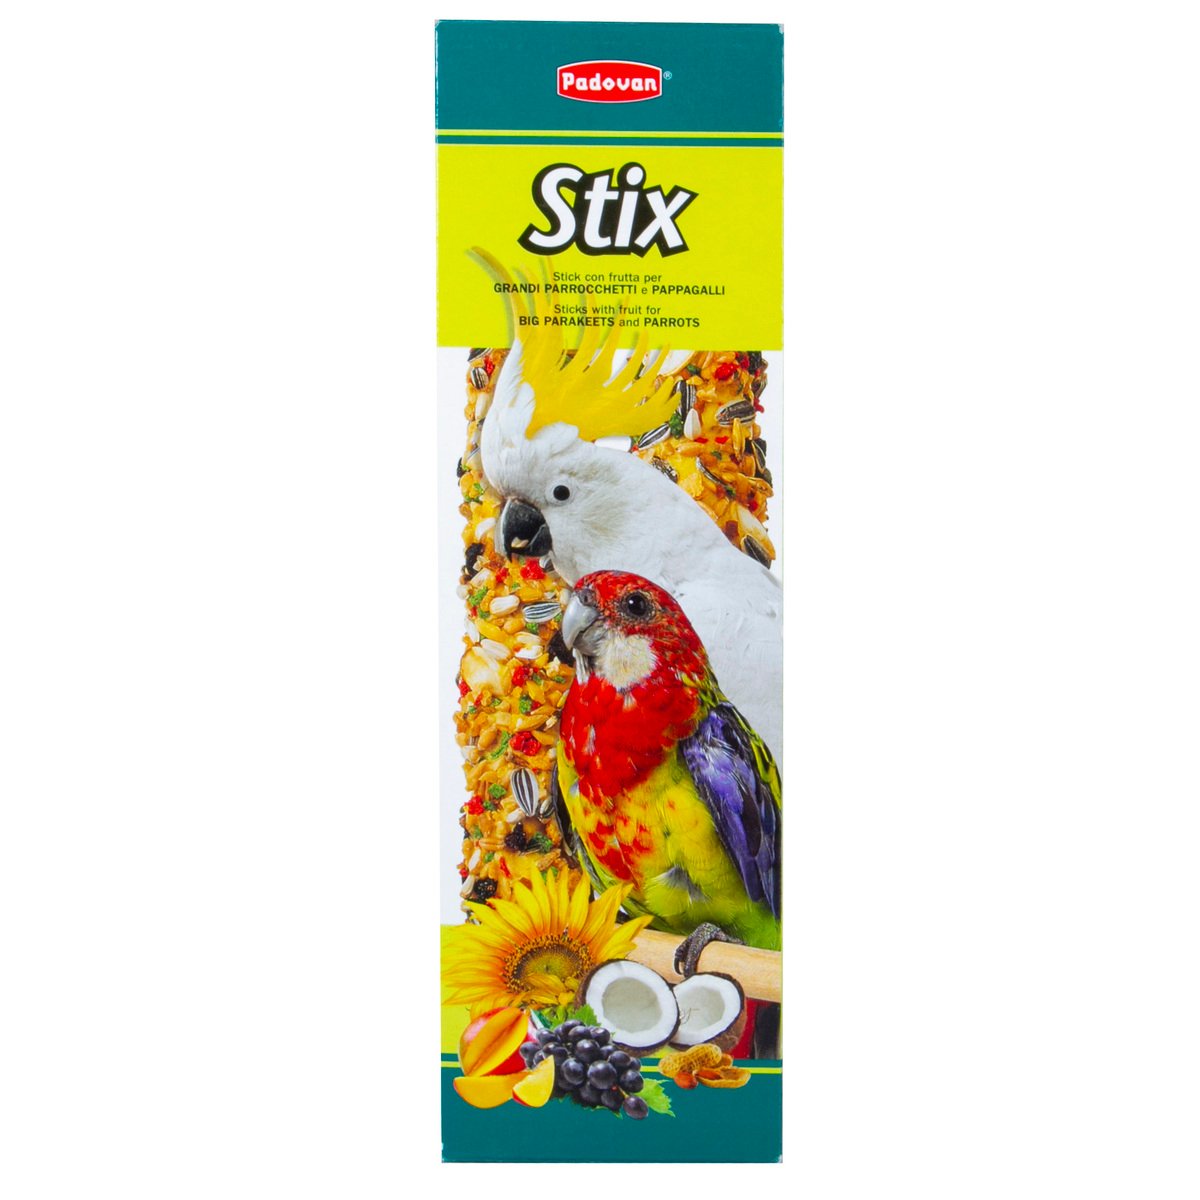 Padovan Stix Big Parakeets & Parrots 150g